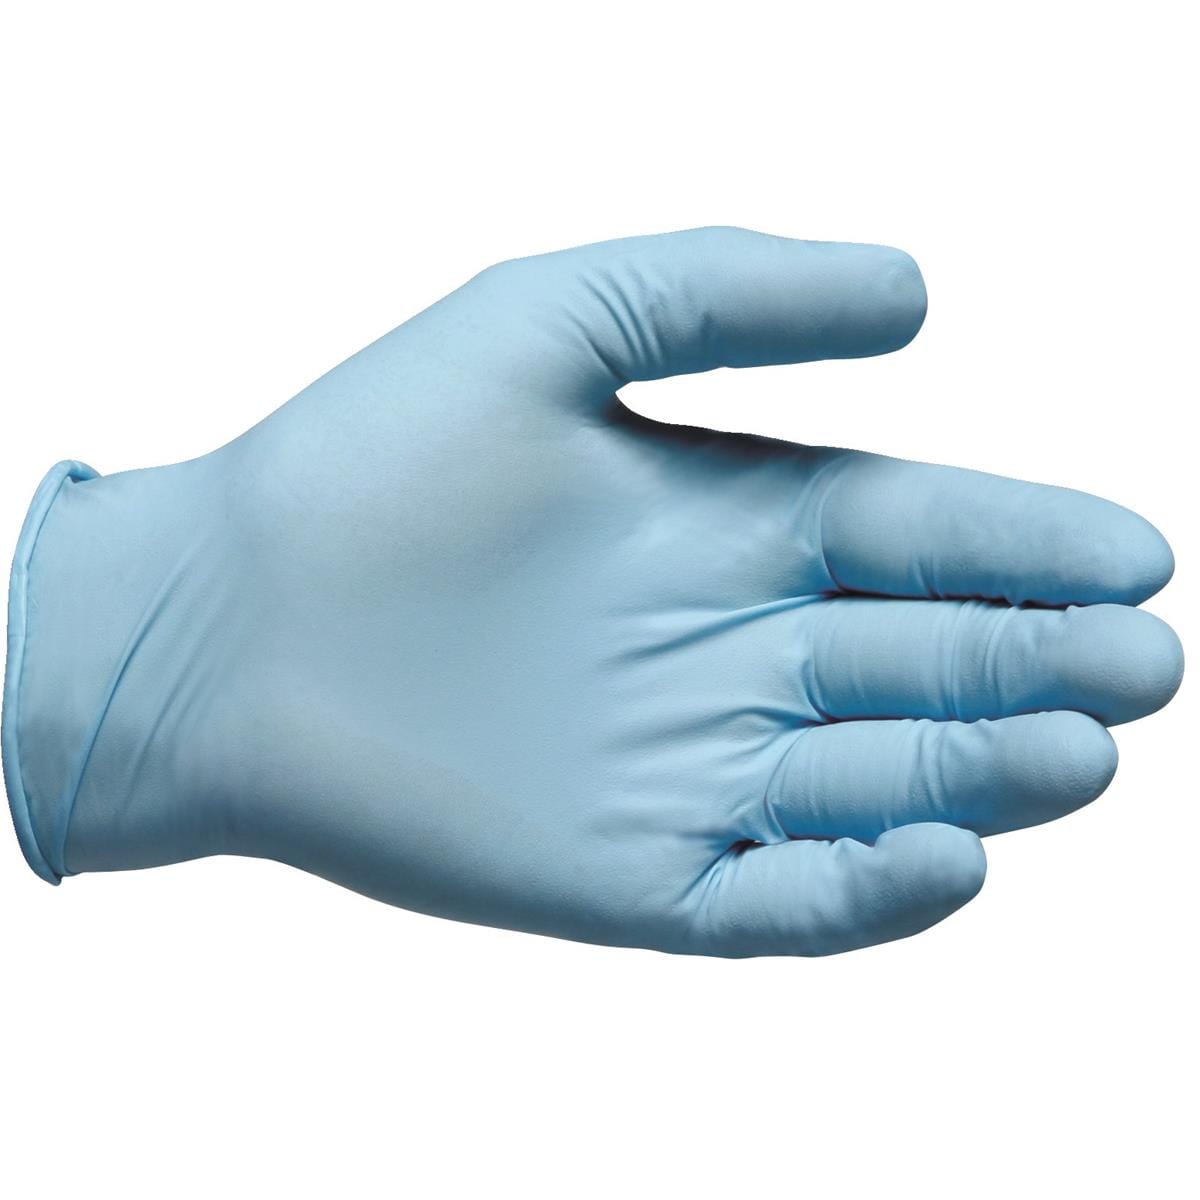 SHOWA BEST® 4-mil, Powder-Free Nitrile Gloves